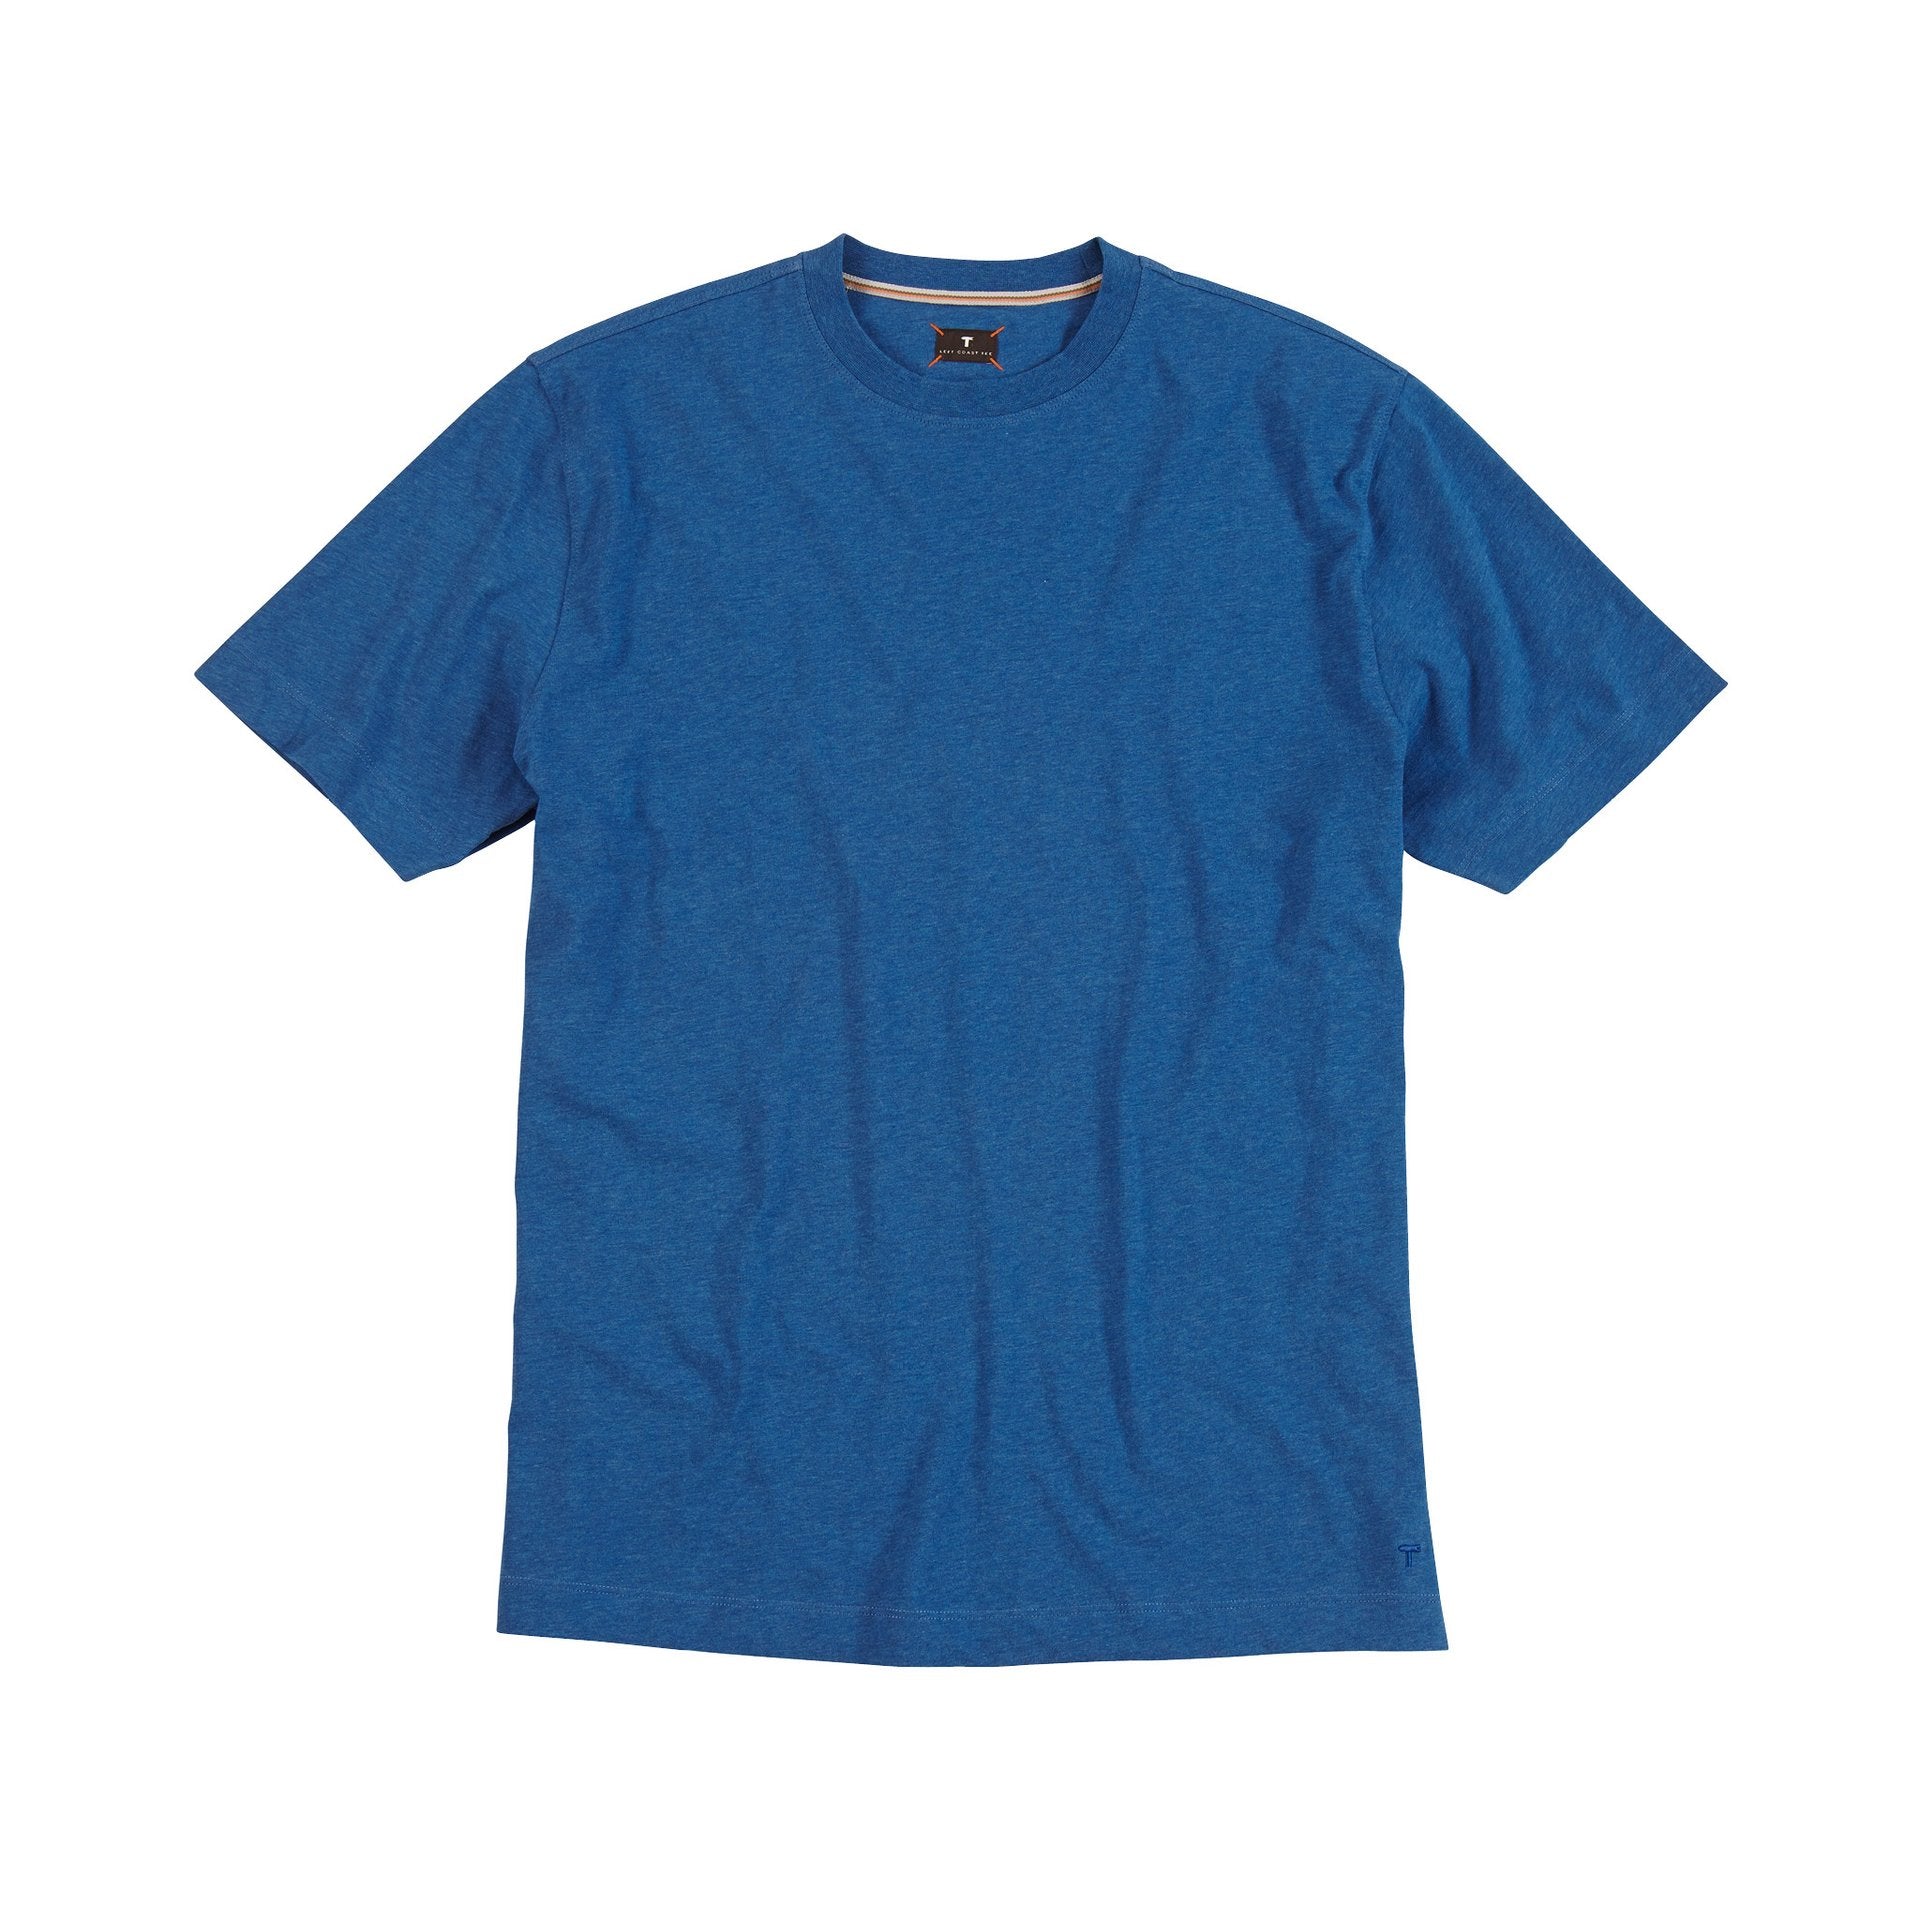 Melange Crew Neck Peruvian Cotton Tee Shirt in Bright Blue Mélange by Left Coast Tee